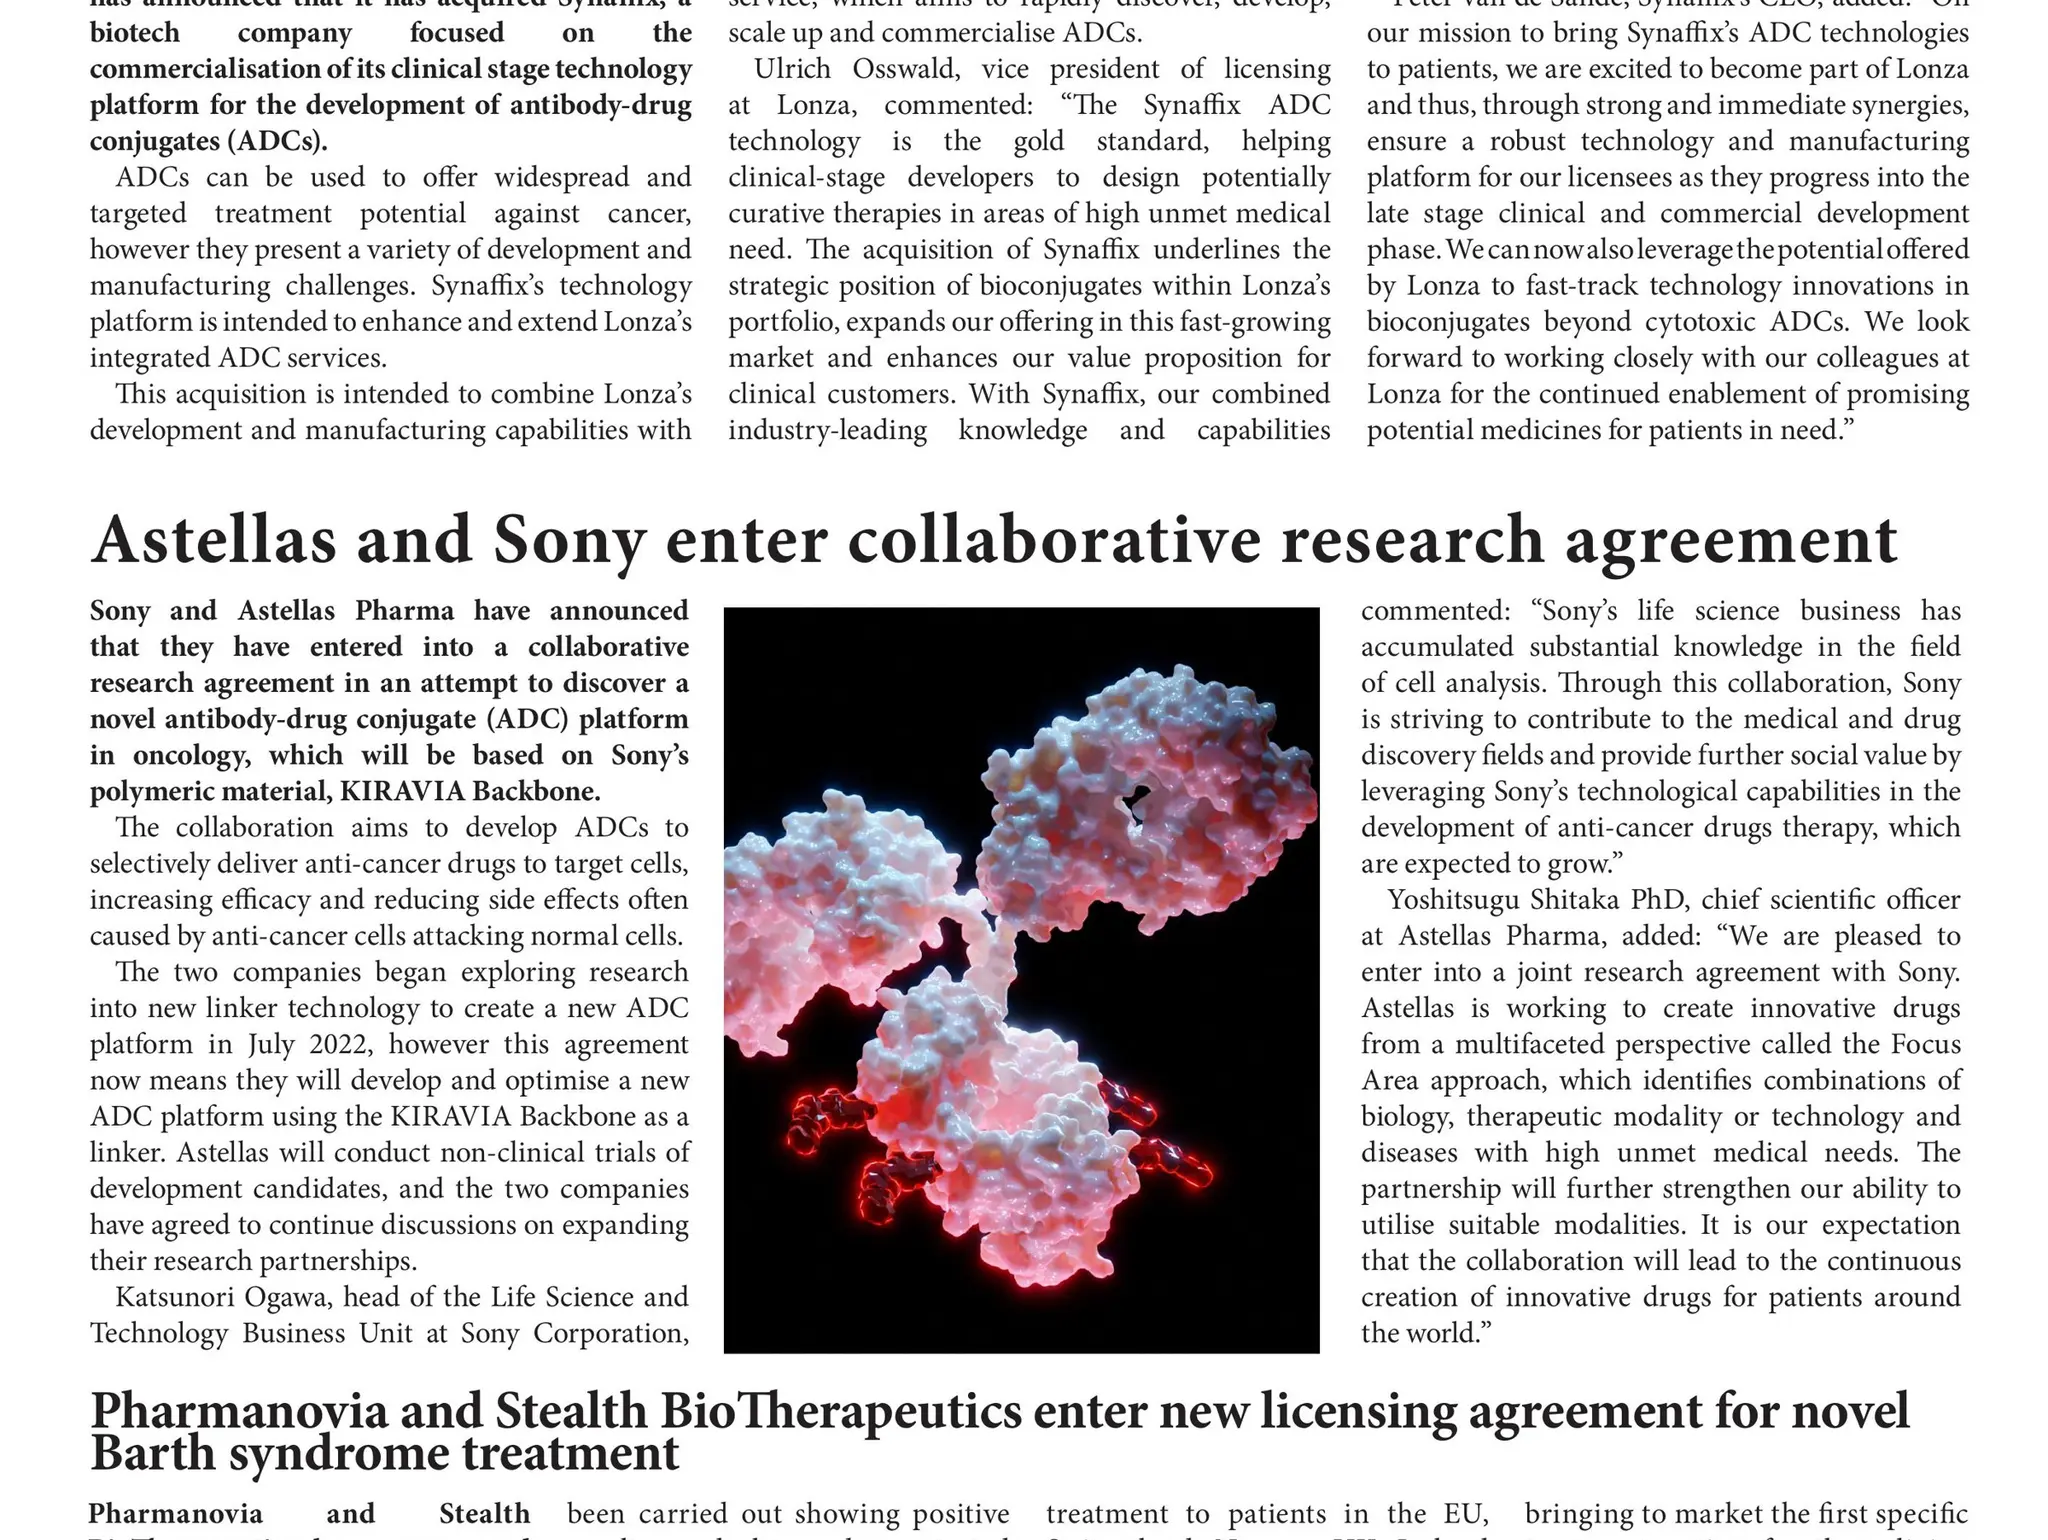 Pharmanovia & Stealth BioTherapeutics enter licensing agreement for novel Barth syndrome treatment